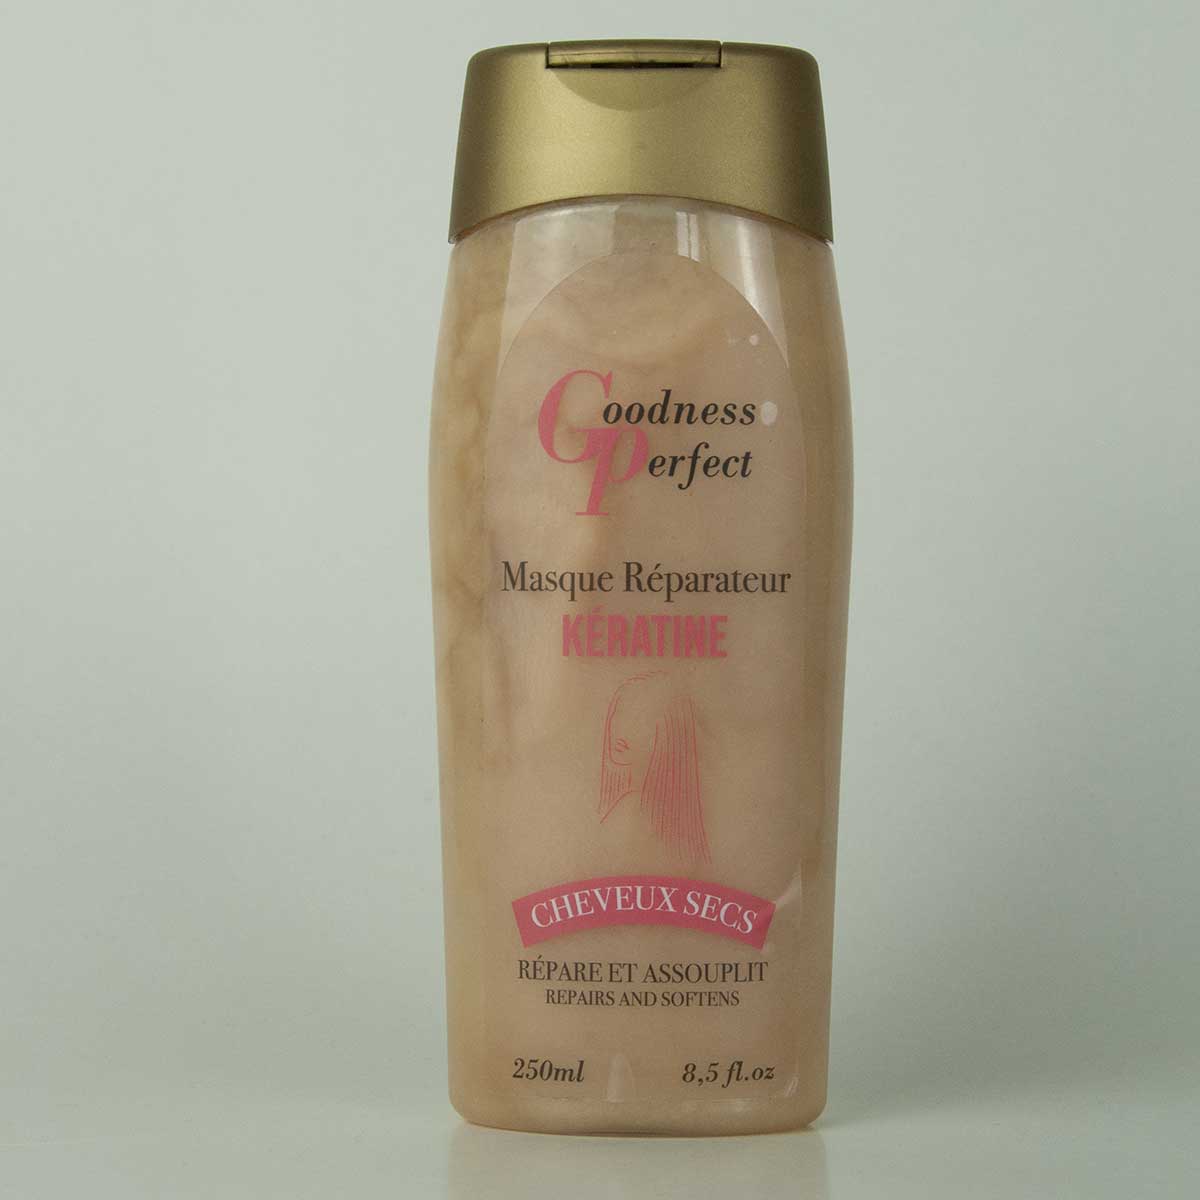 Goodness perfect ultra protective caramel shampoo